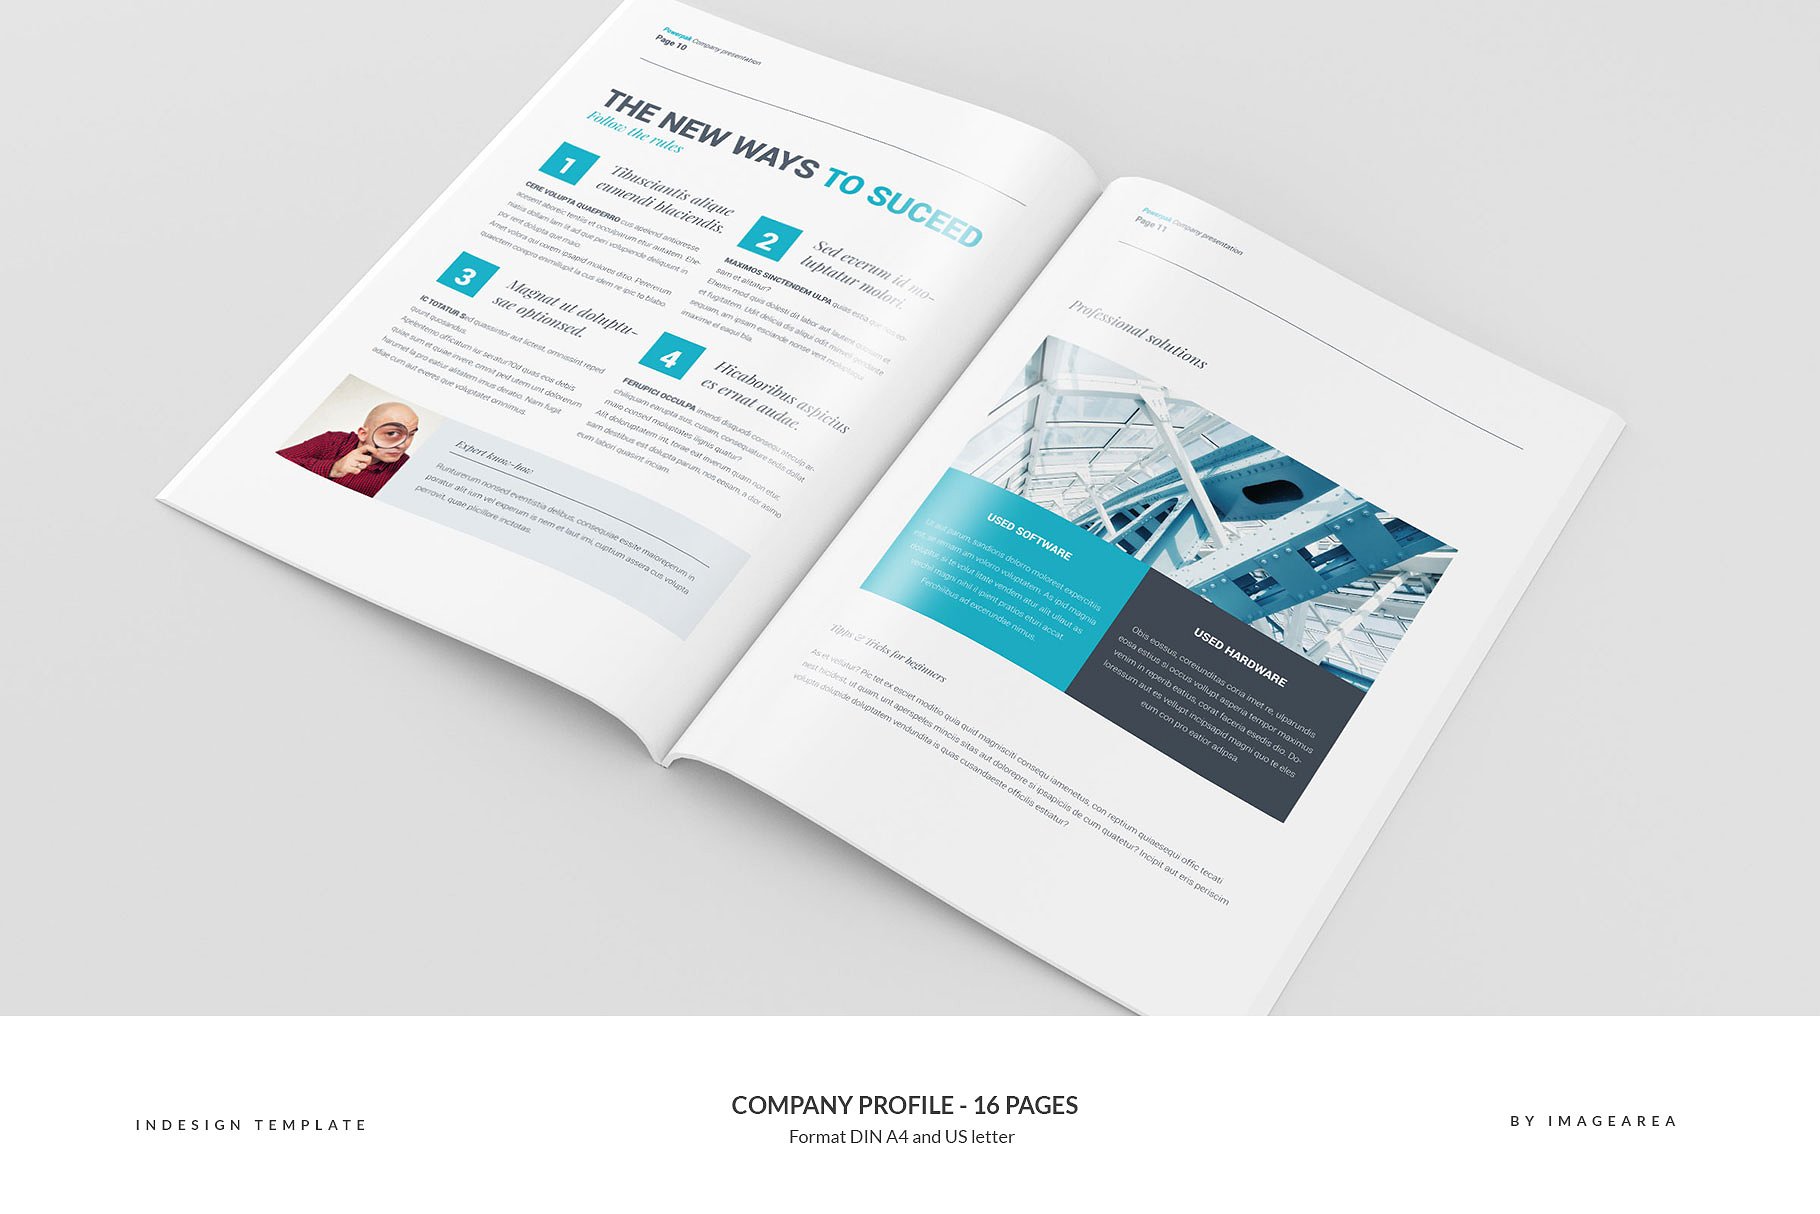 企业宣传画册设计模板 Company Profile – 16 Pages插图(6)